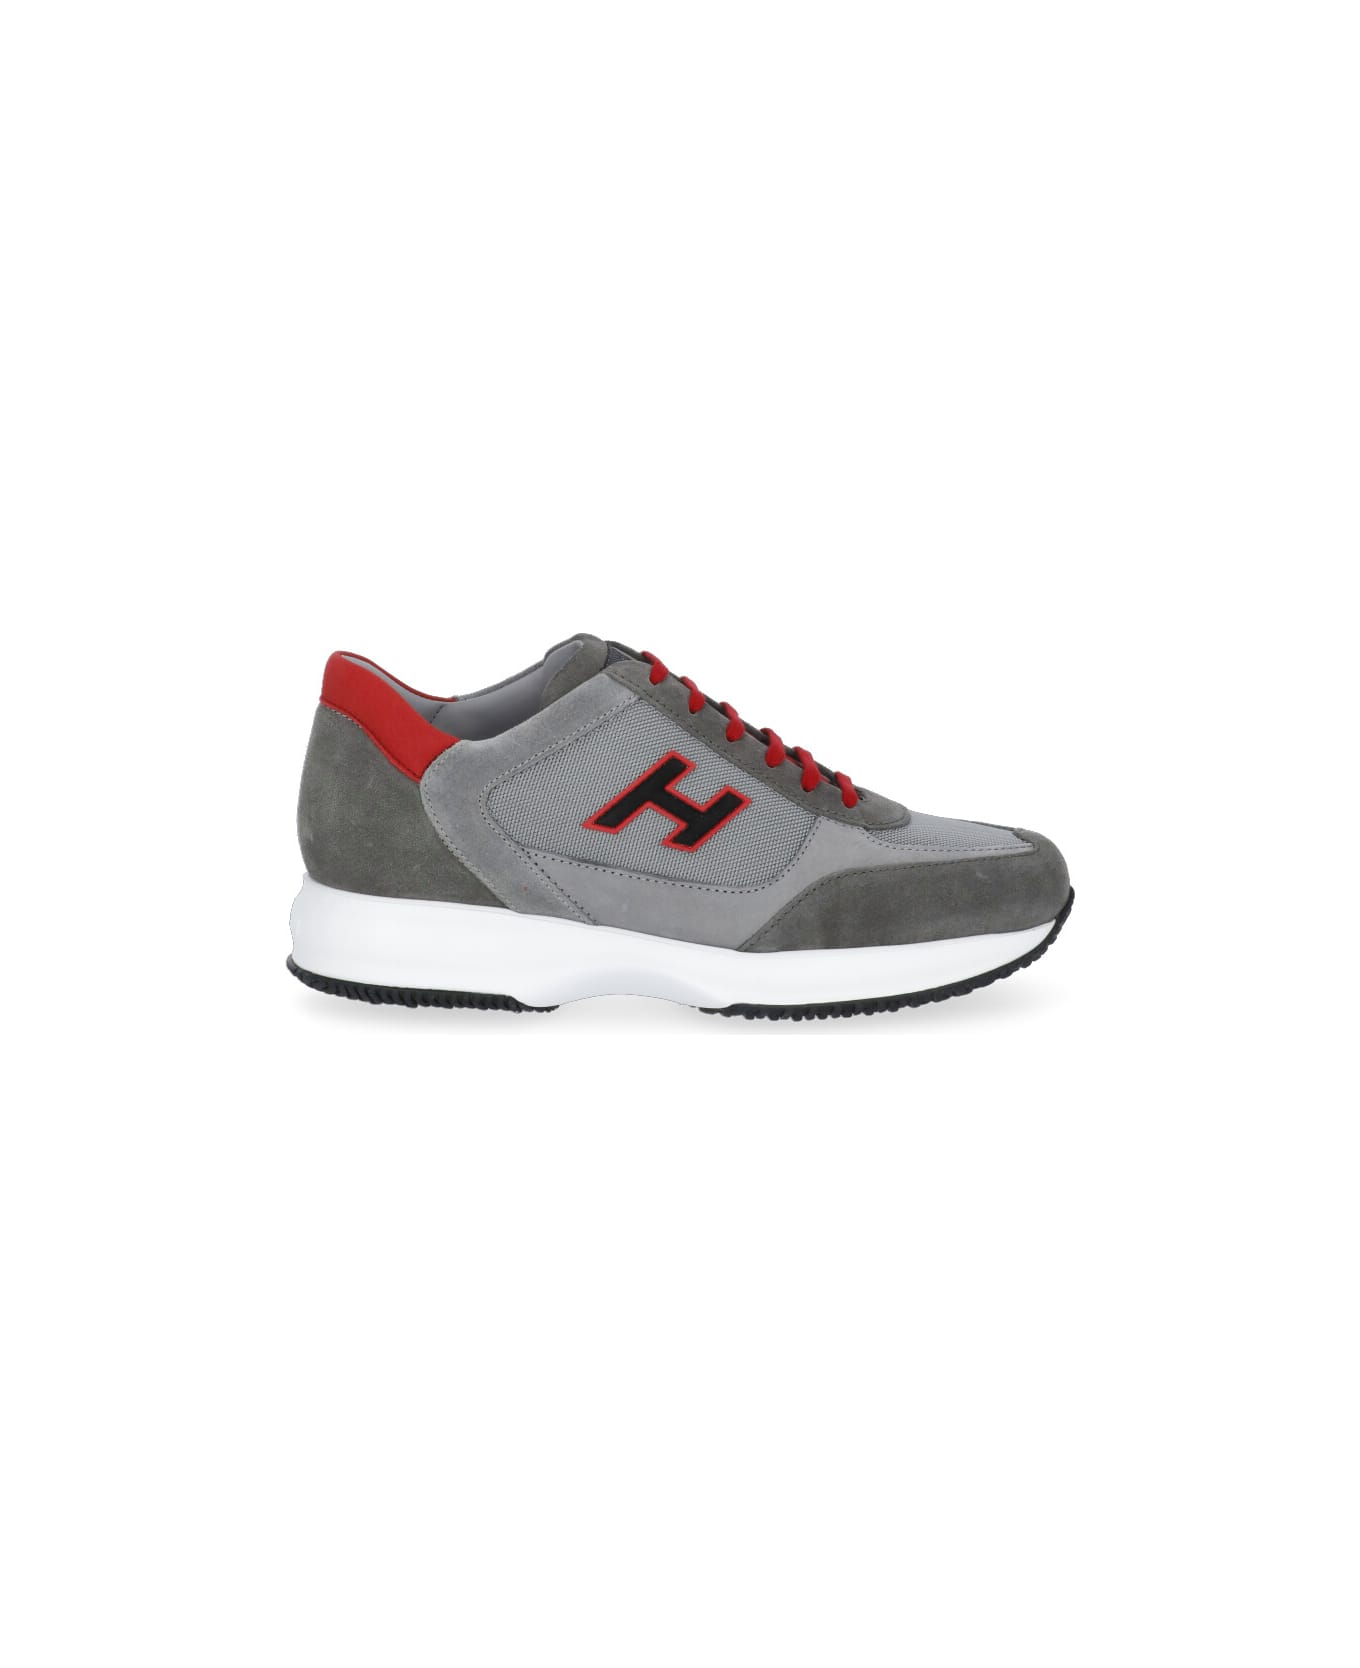 Hogan "interactive" Sneakers - Grey スニーカー